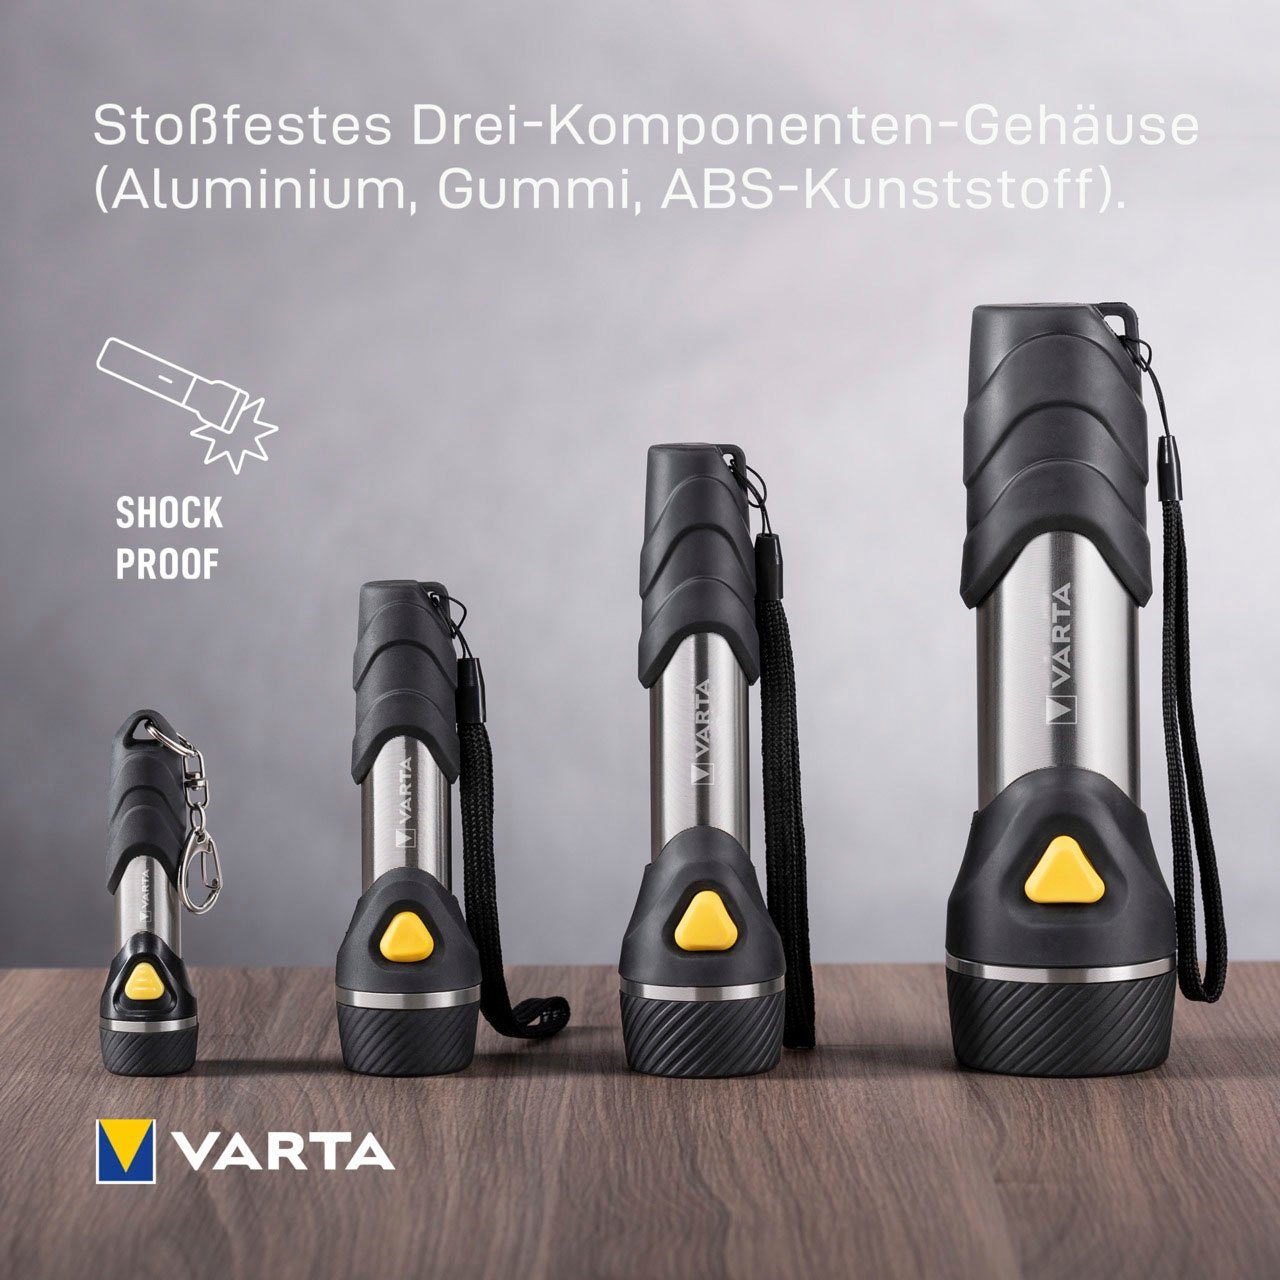 VARTA mit Multi Light F10 LEDs LED 5 Day VARTA Taschenlampe Taschenlampe